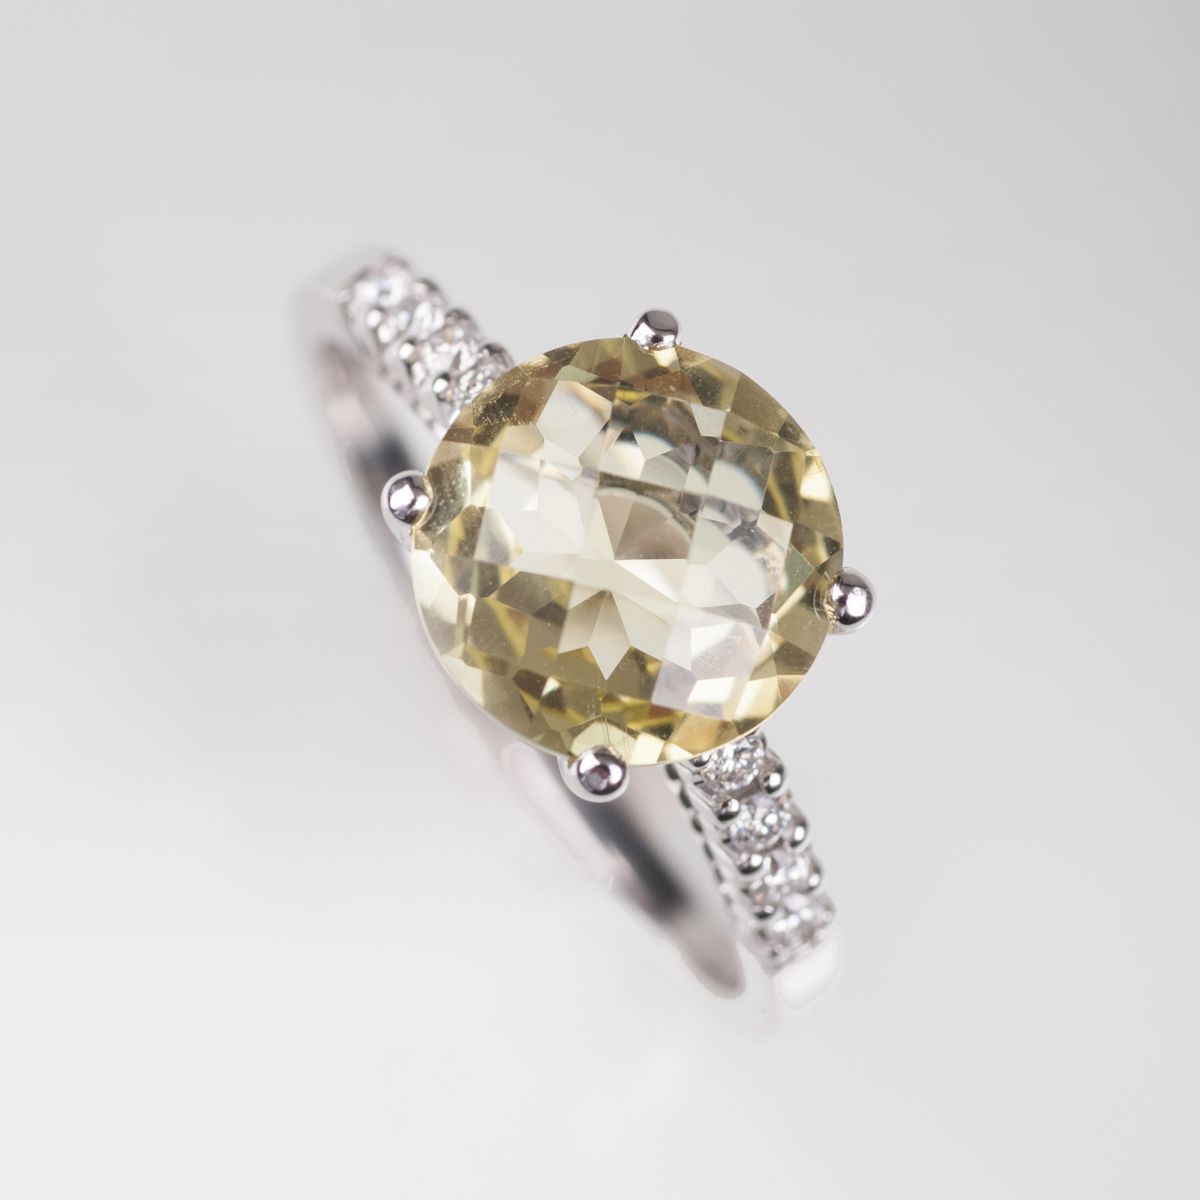 A Lemon citrin diamond ring